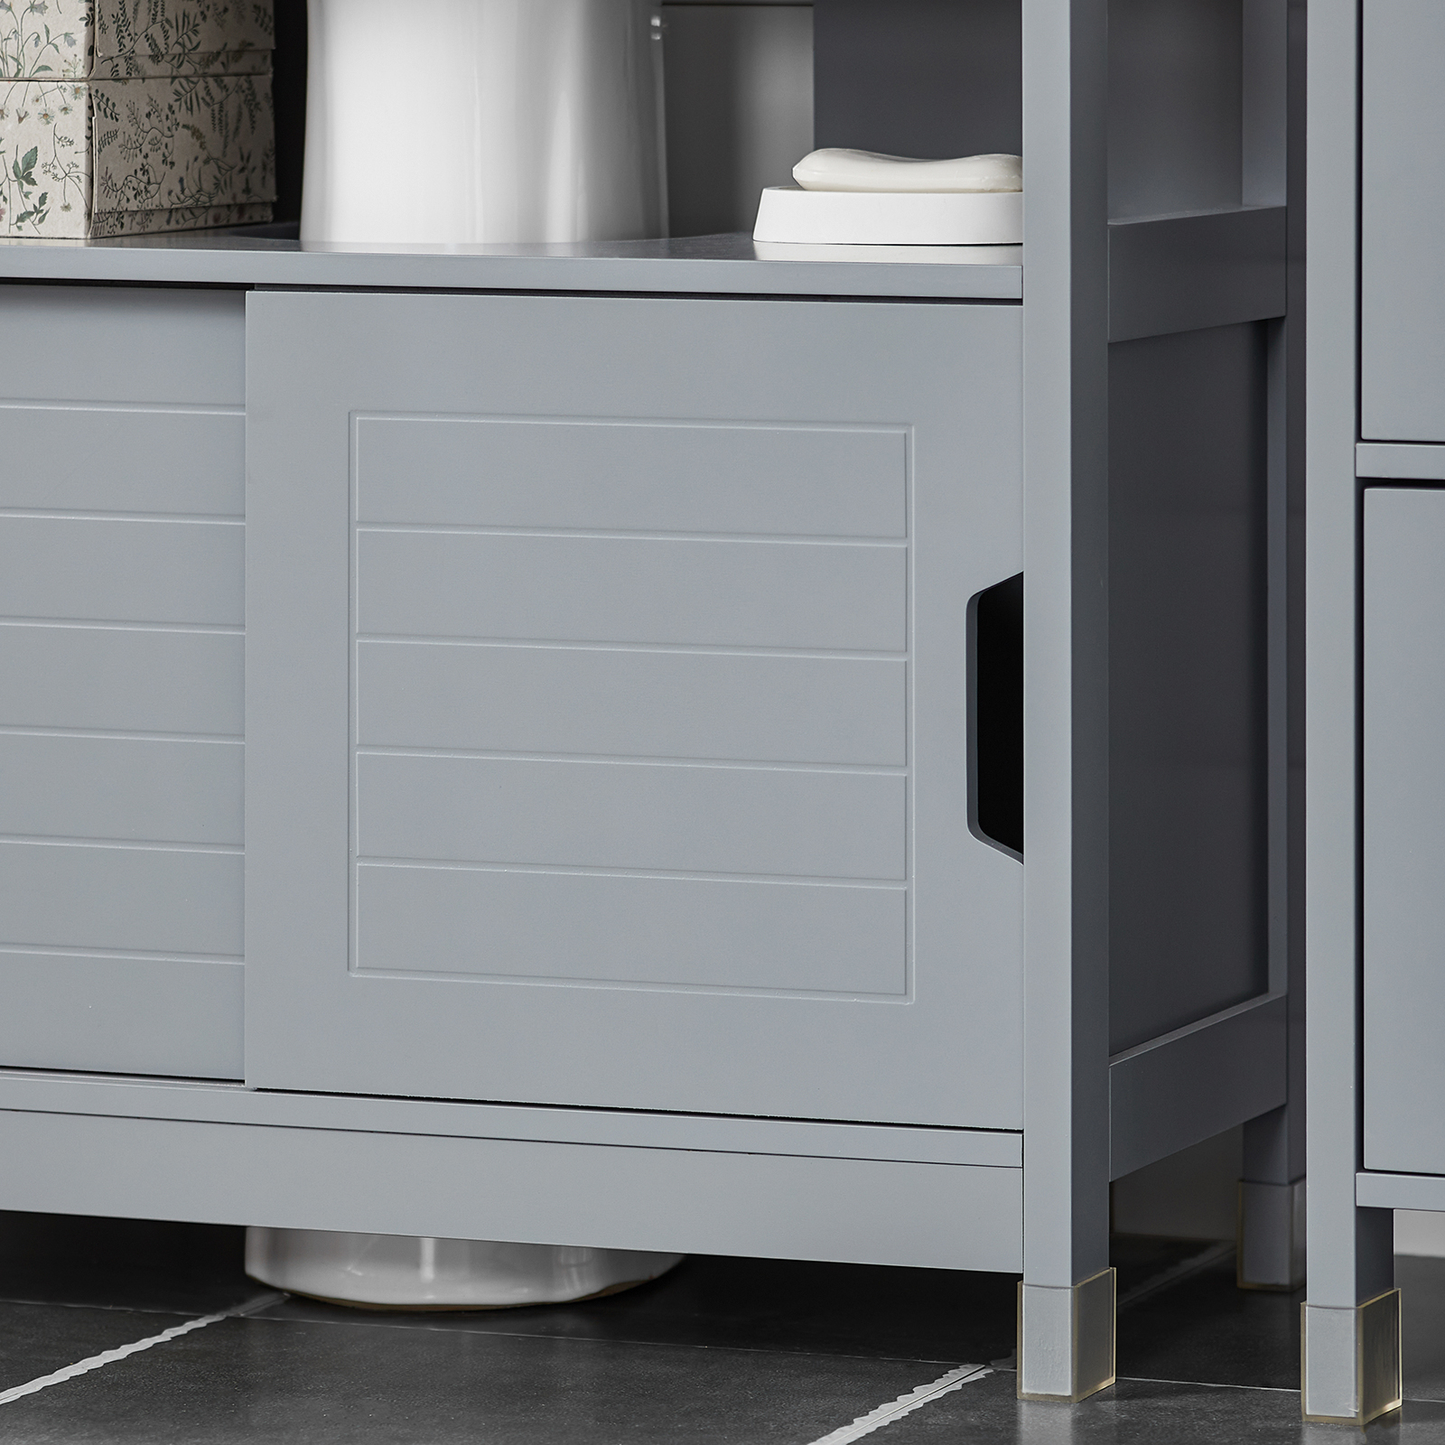 SoBuy Vanity Unit Bathroom Furniture, Suitable for Pedestal Sinks,Grey